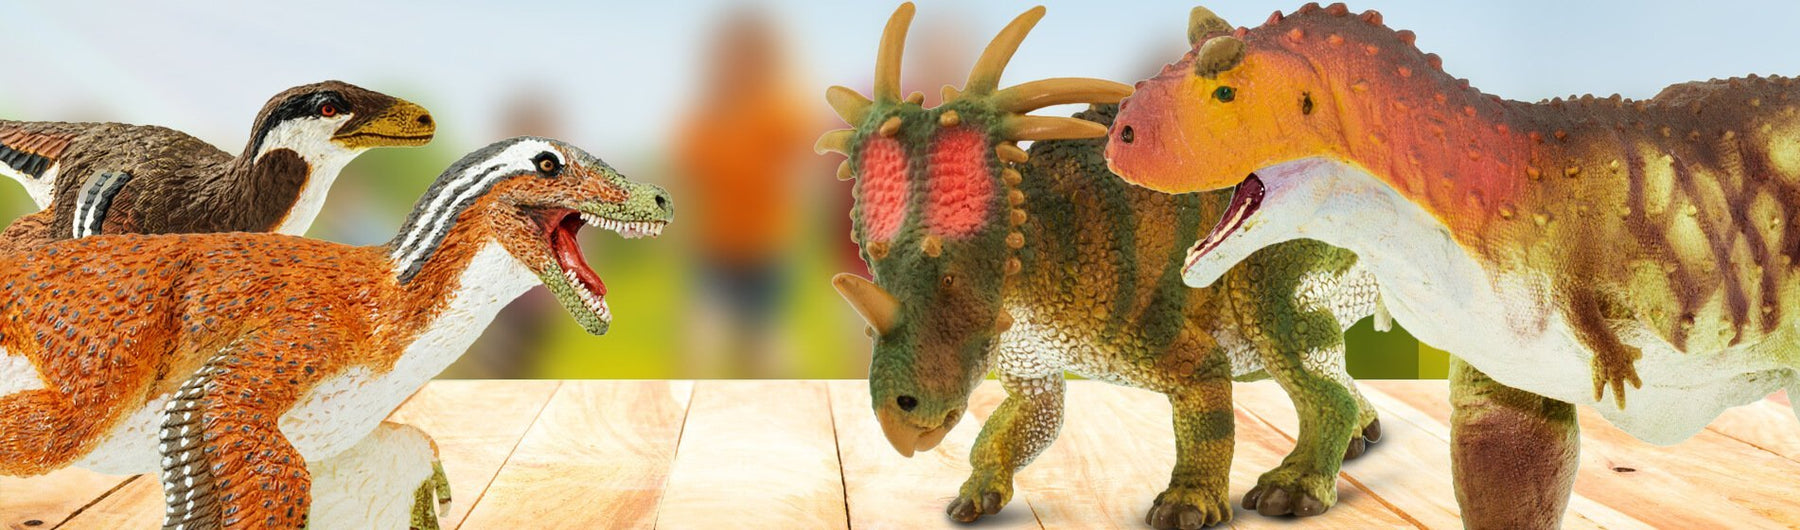 What Makes Safari Ltd’s Dinosaur Figures Realistic and Accurate? - Safari Ltd®